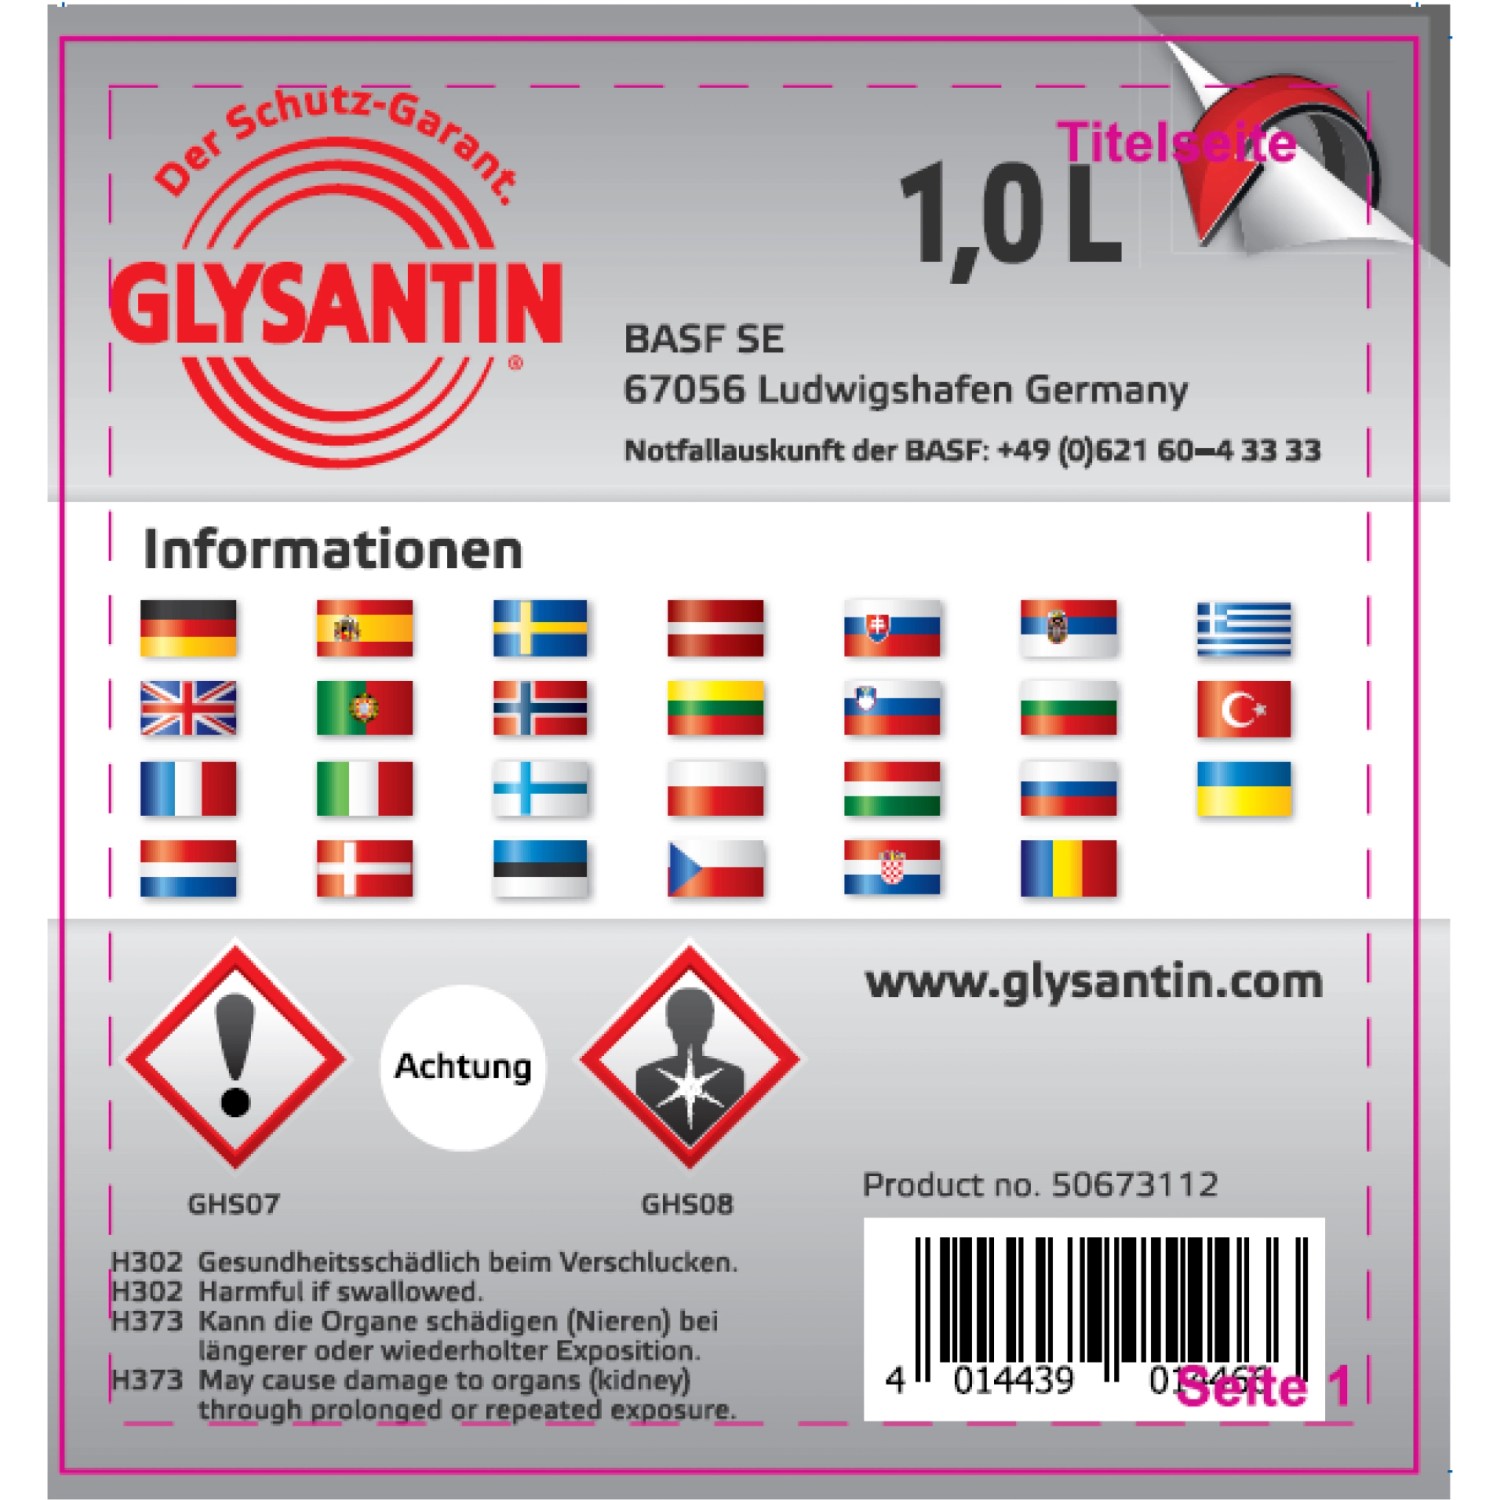 Glysantin G48